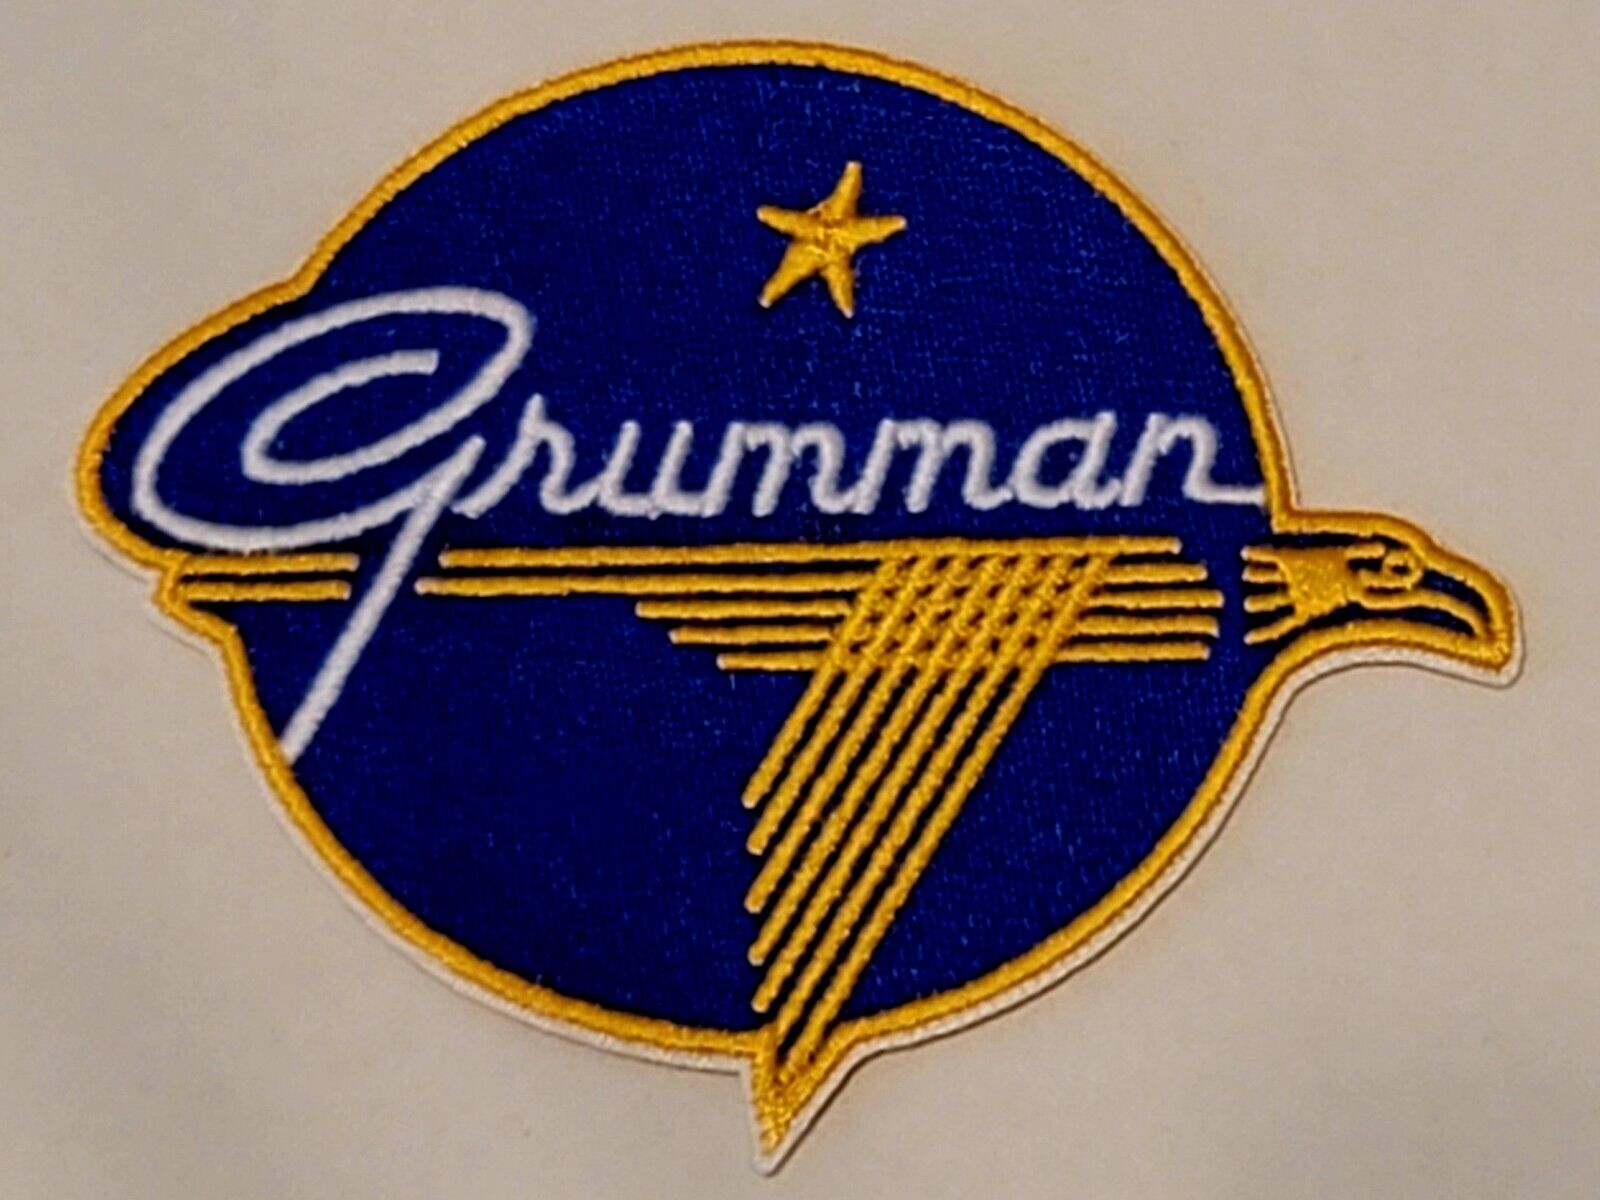  GRUMMAN Aircraft Manufacturers. Military Squadron Hat/ Jacket / shirt Patch.